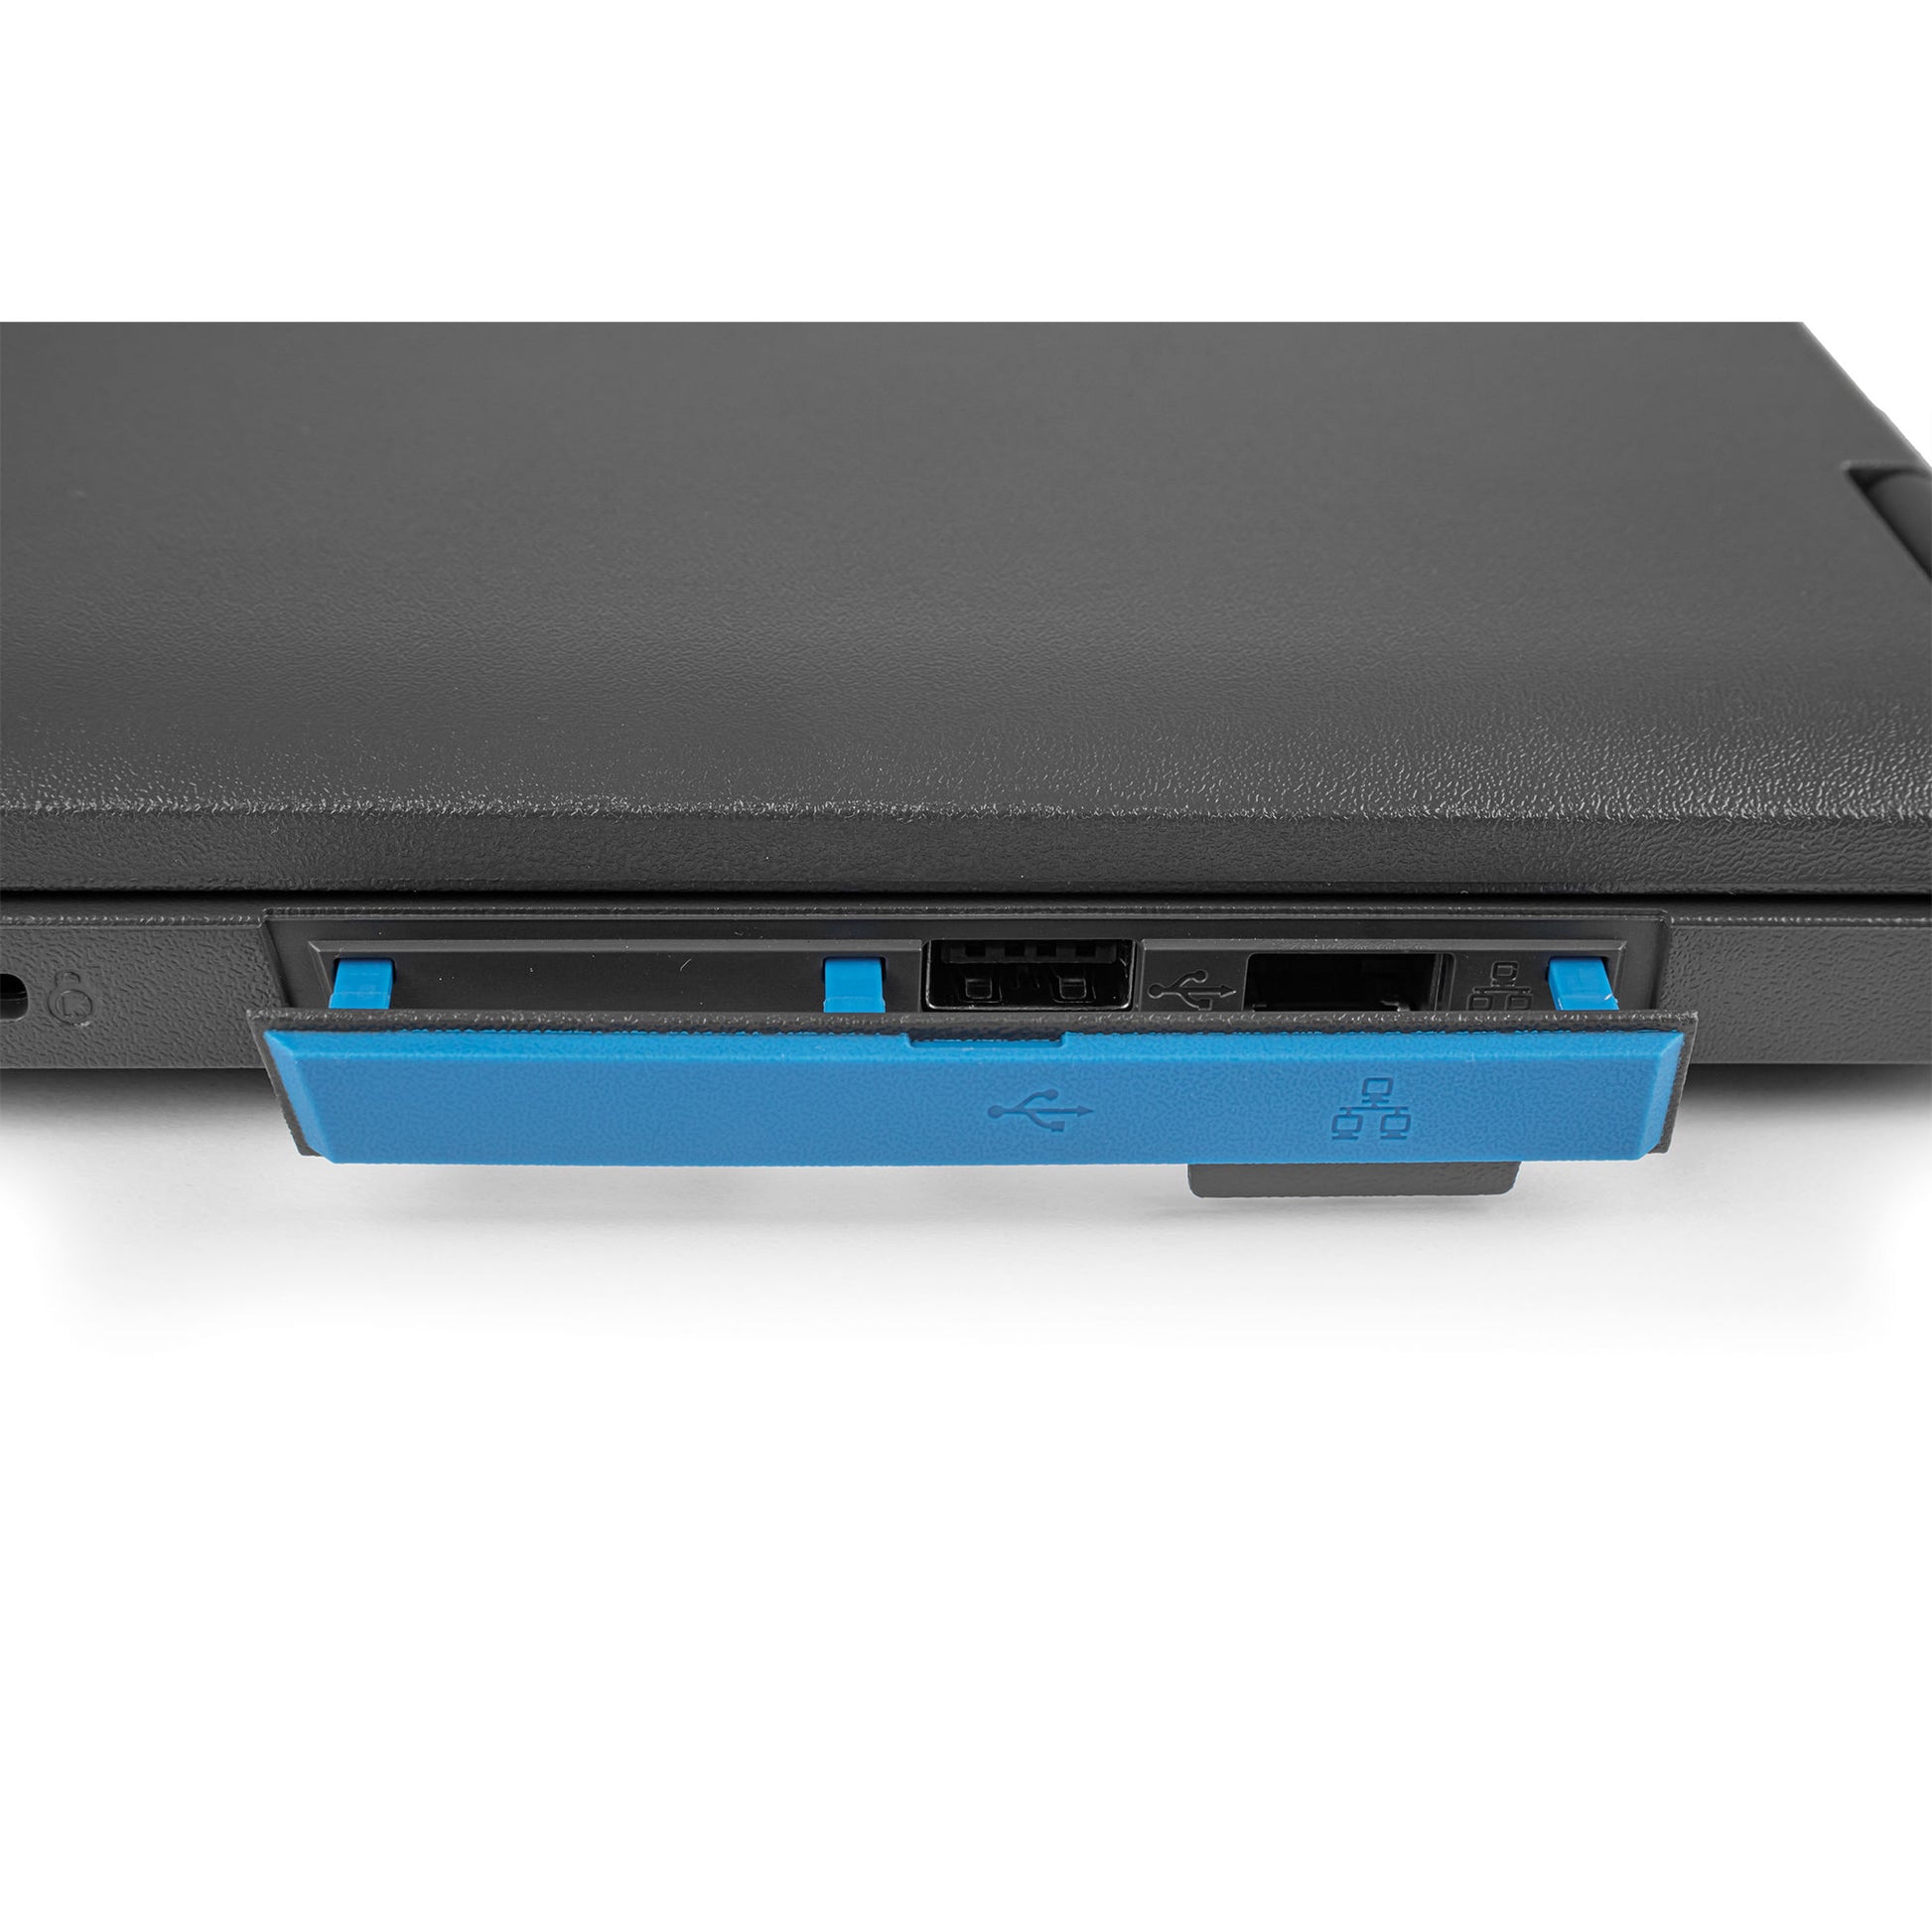 Bild der Anschlüsse des Amplio 6 laptops - USB 2.0, RJ45, Kingston Lock